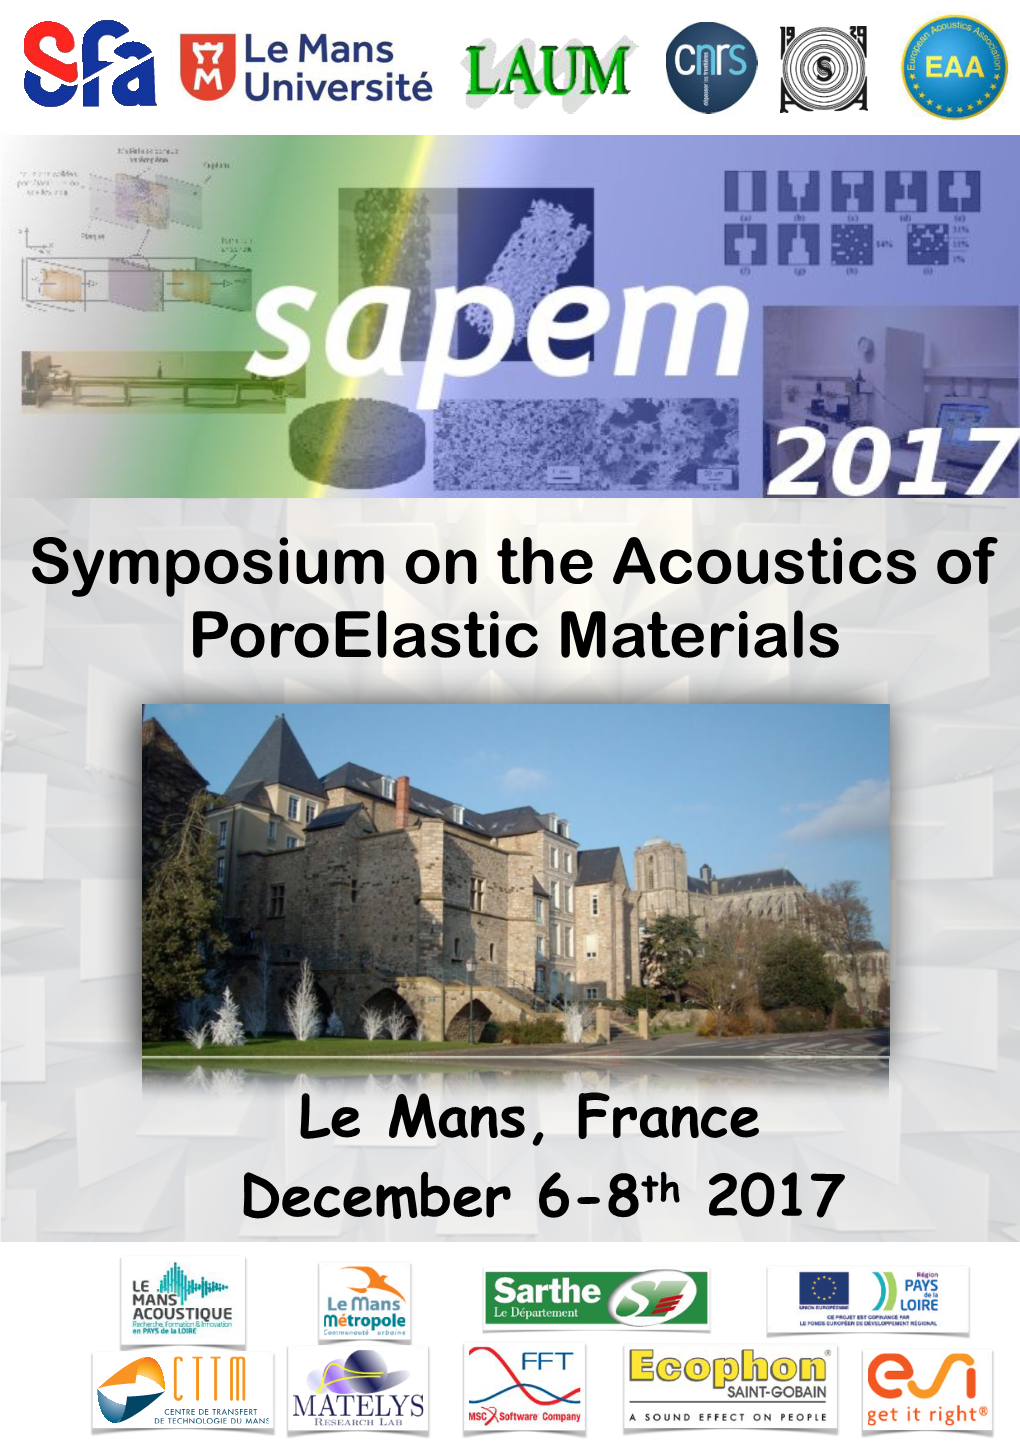 Symposium on the Acoustics of Poroelastic Materials